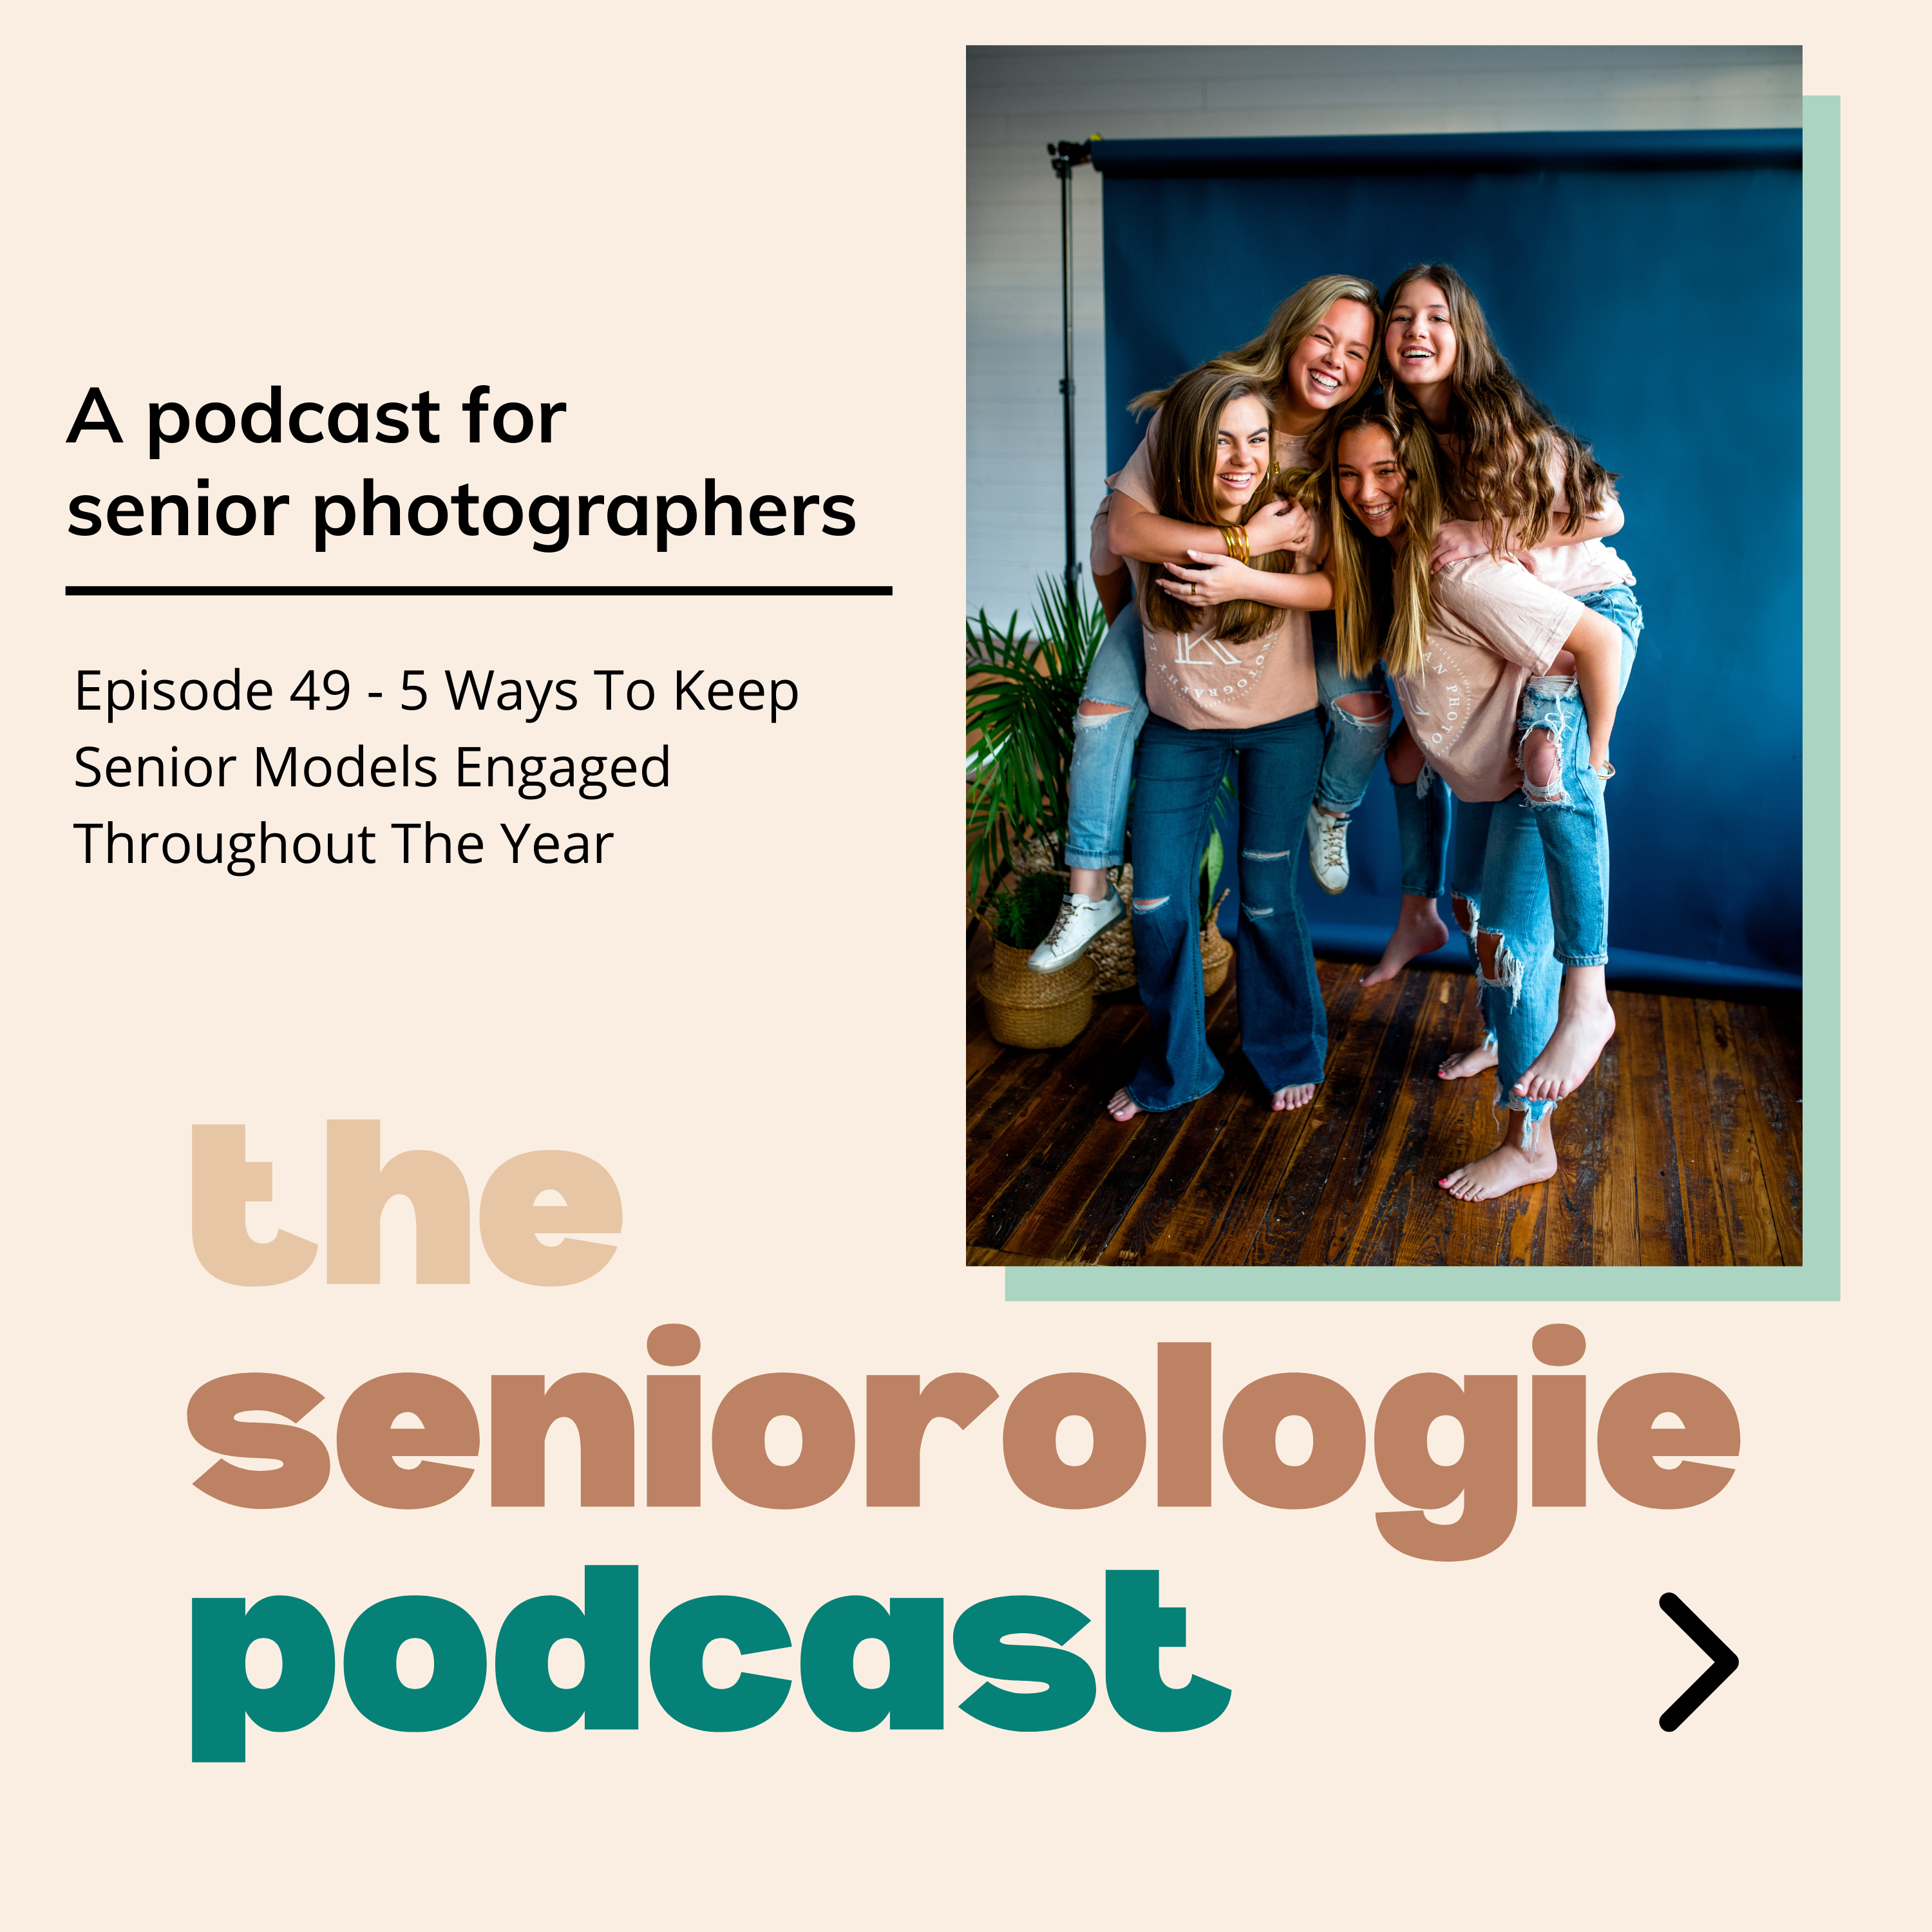 podcast episode for senior photographers